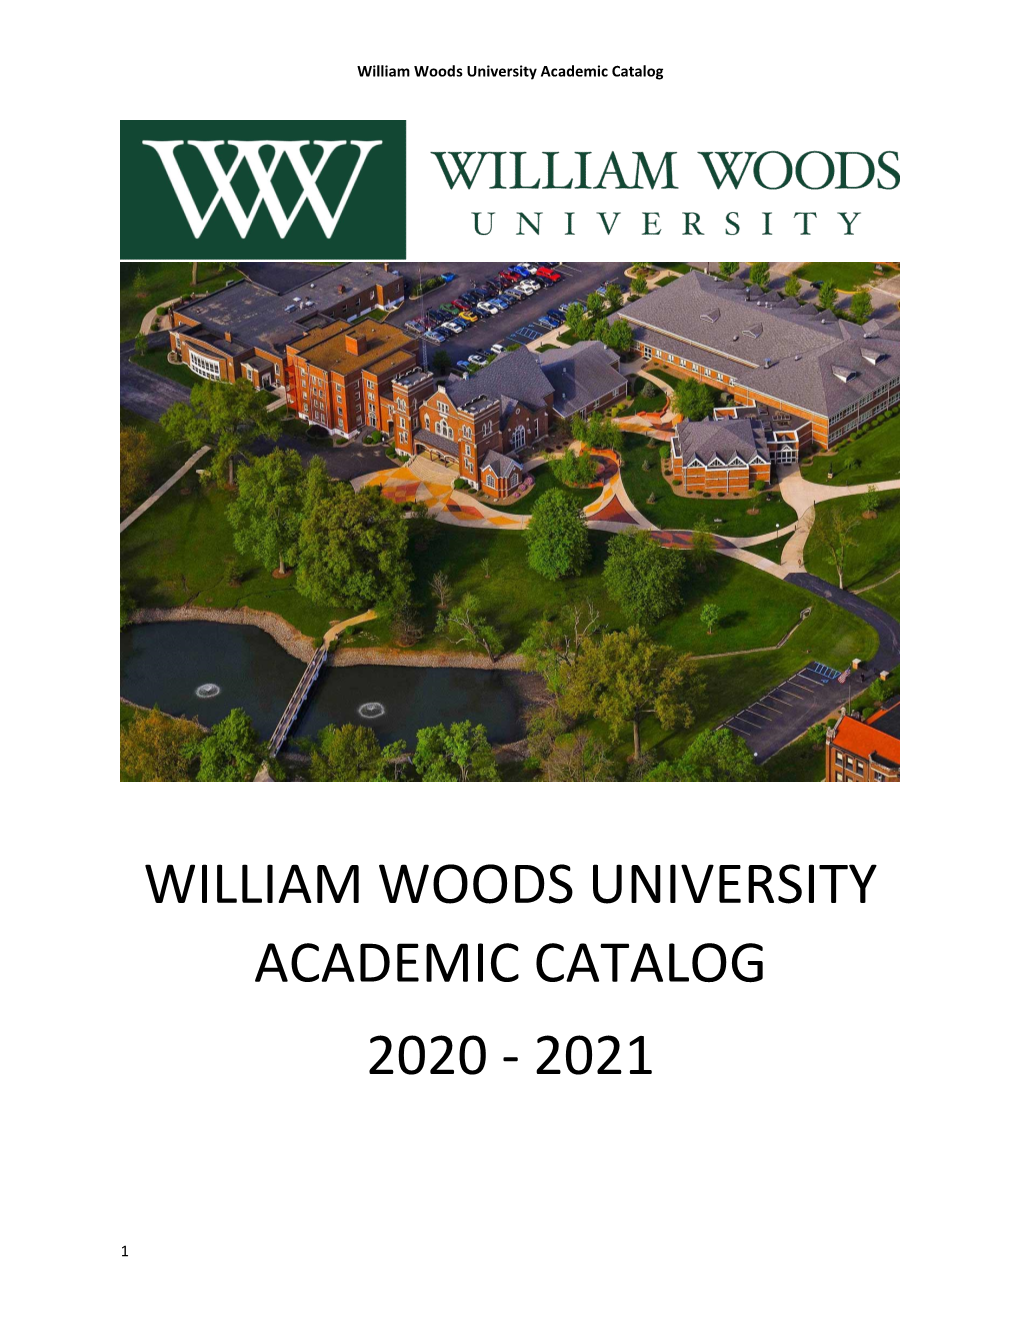 William Woods University Academic Catalog 2020 - 2021